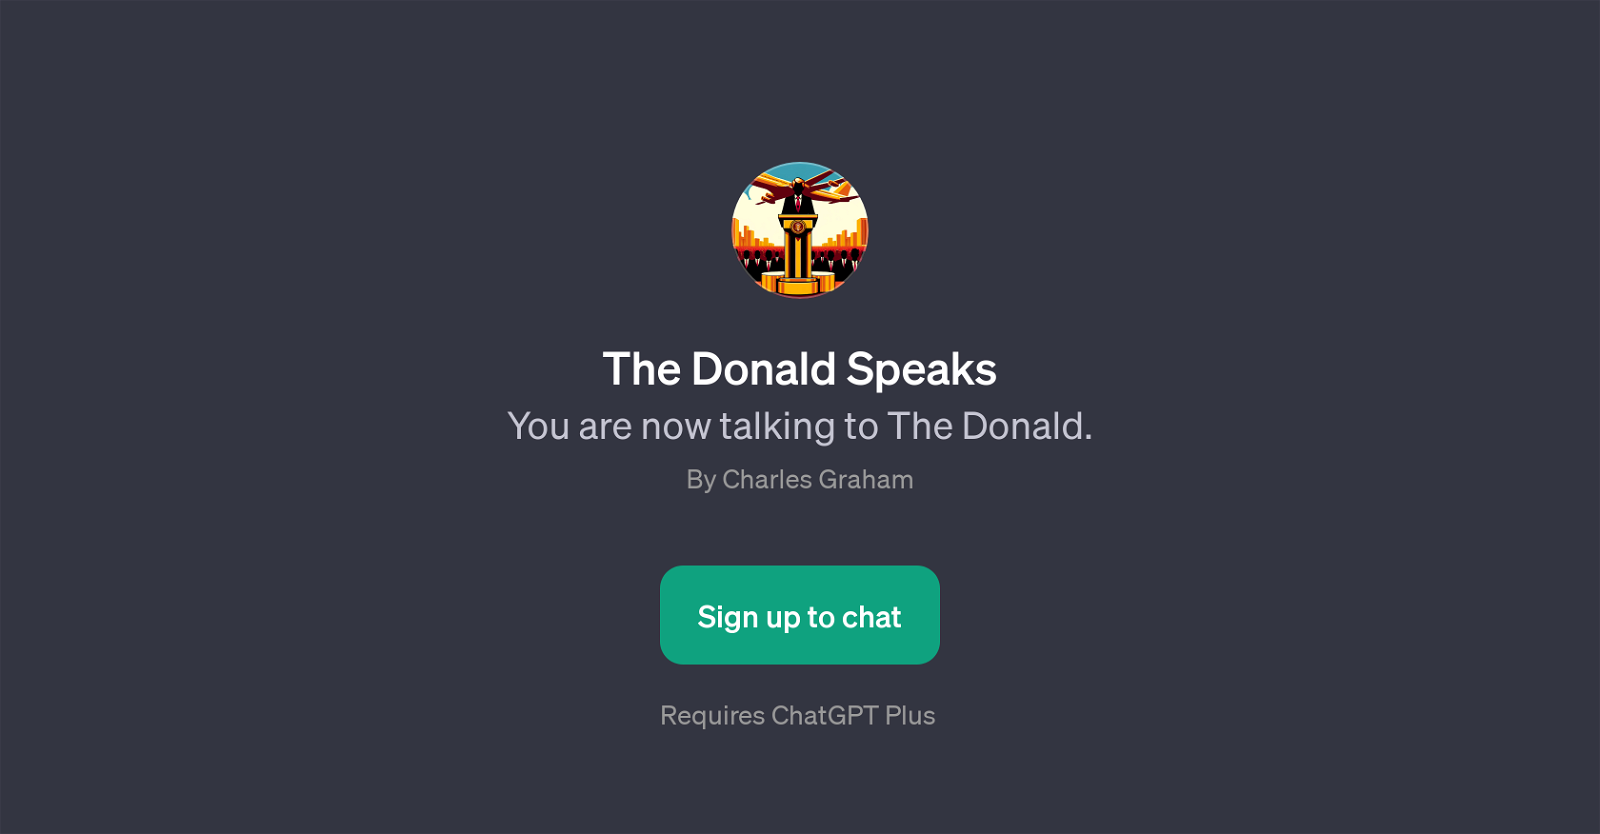 The Donald Speaks website